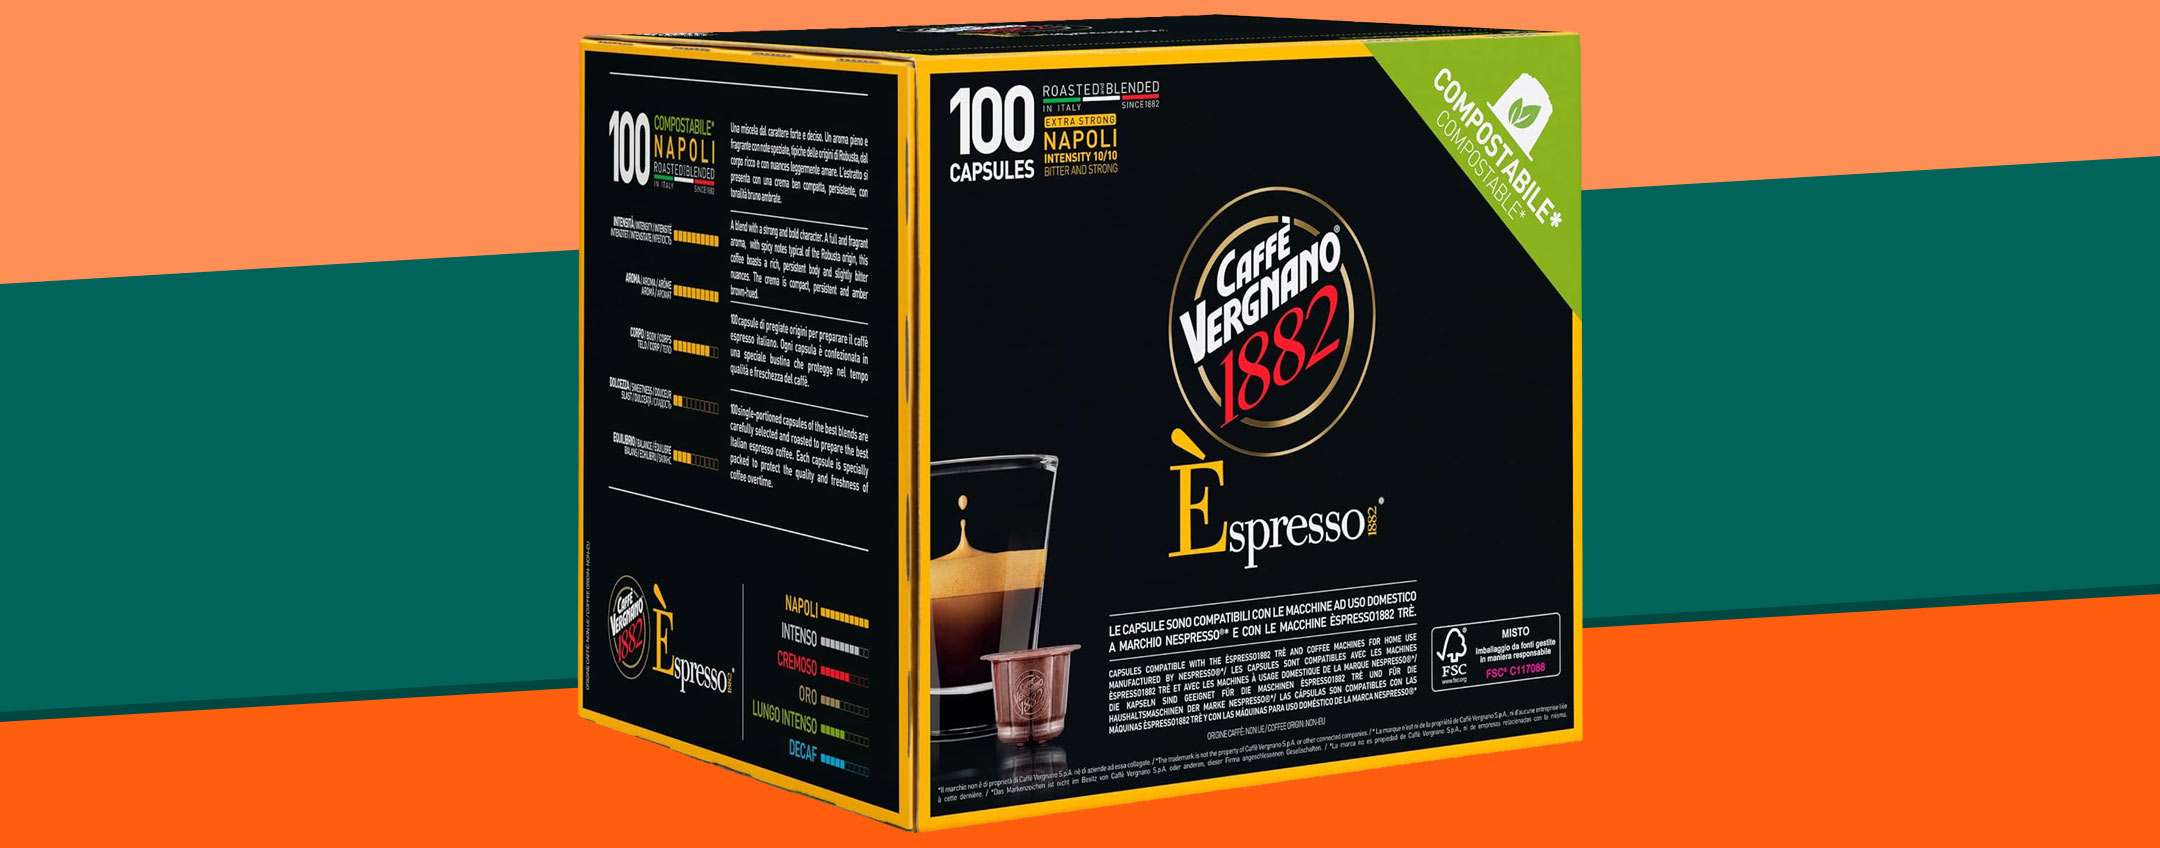 Caffè Vergnano Capsule Compatibili Nespresso Cremoso 200 Offerta